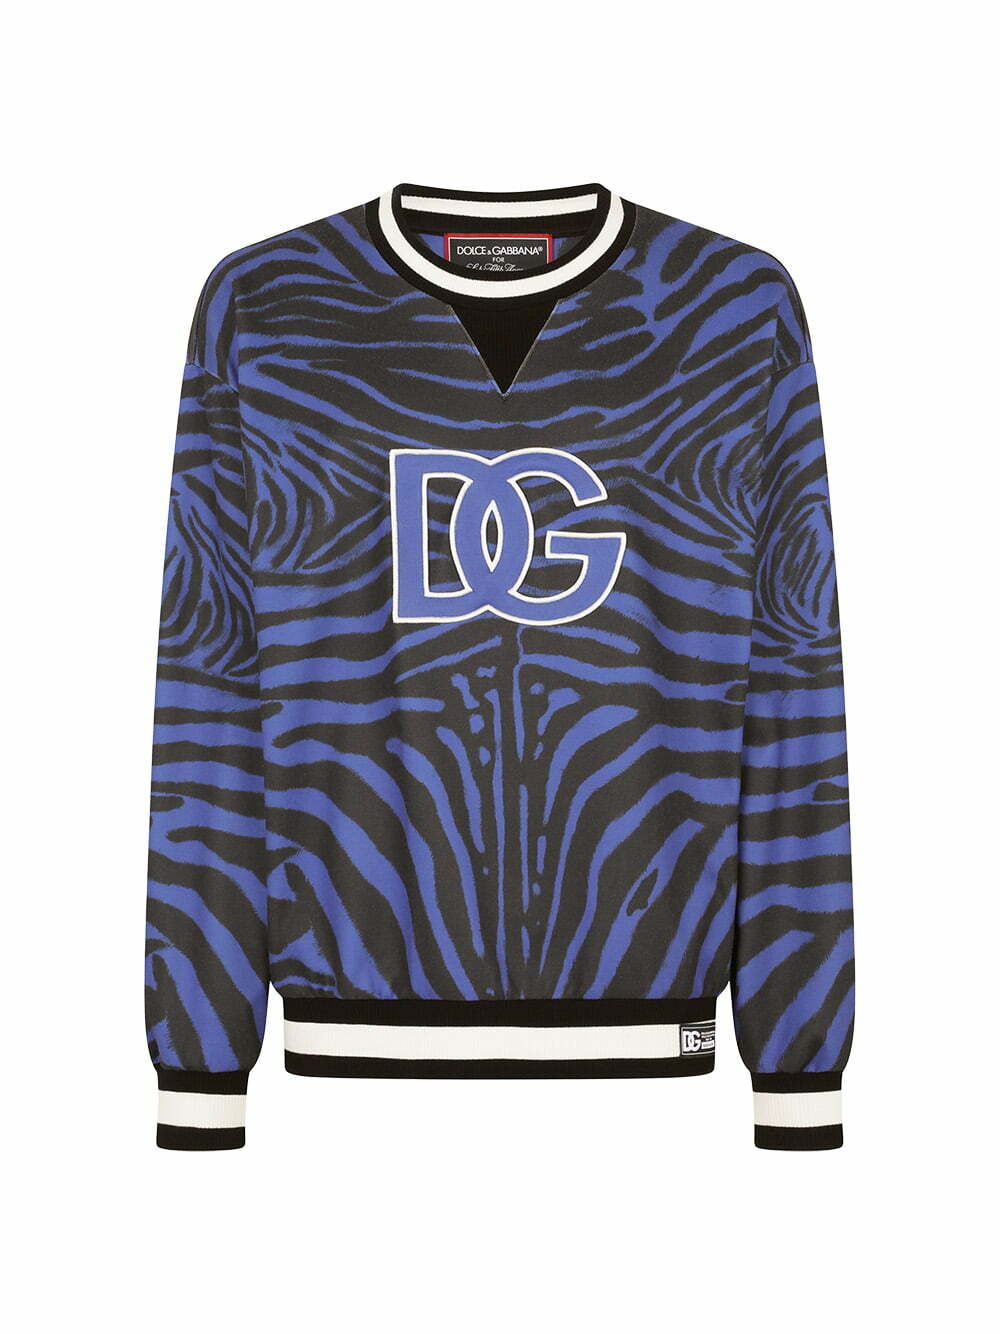 Dolce & Gabbana Zebra Jersey Sweatshirt